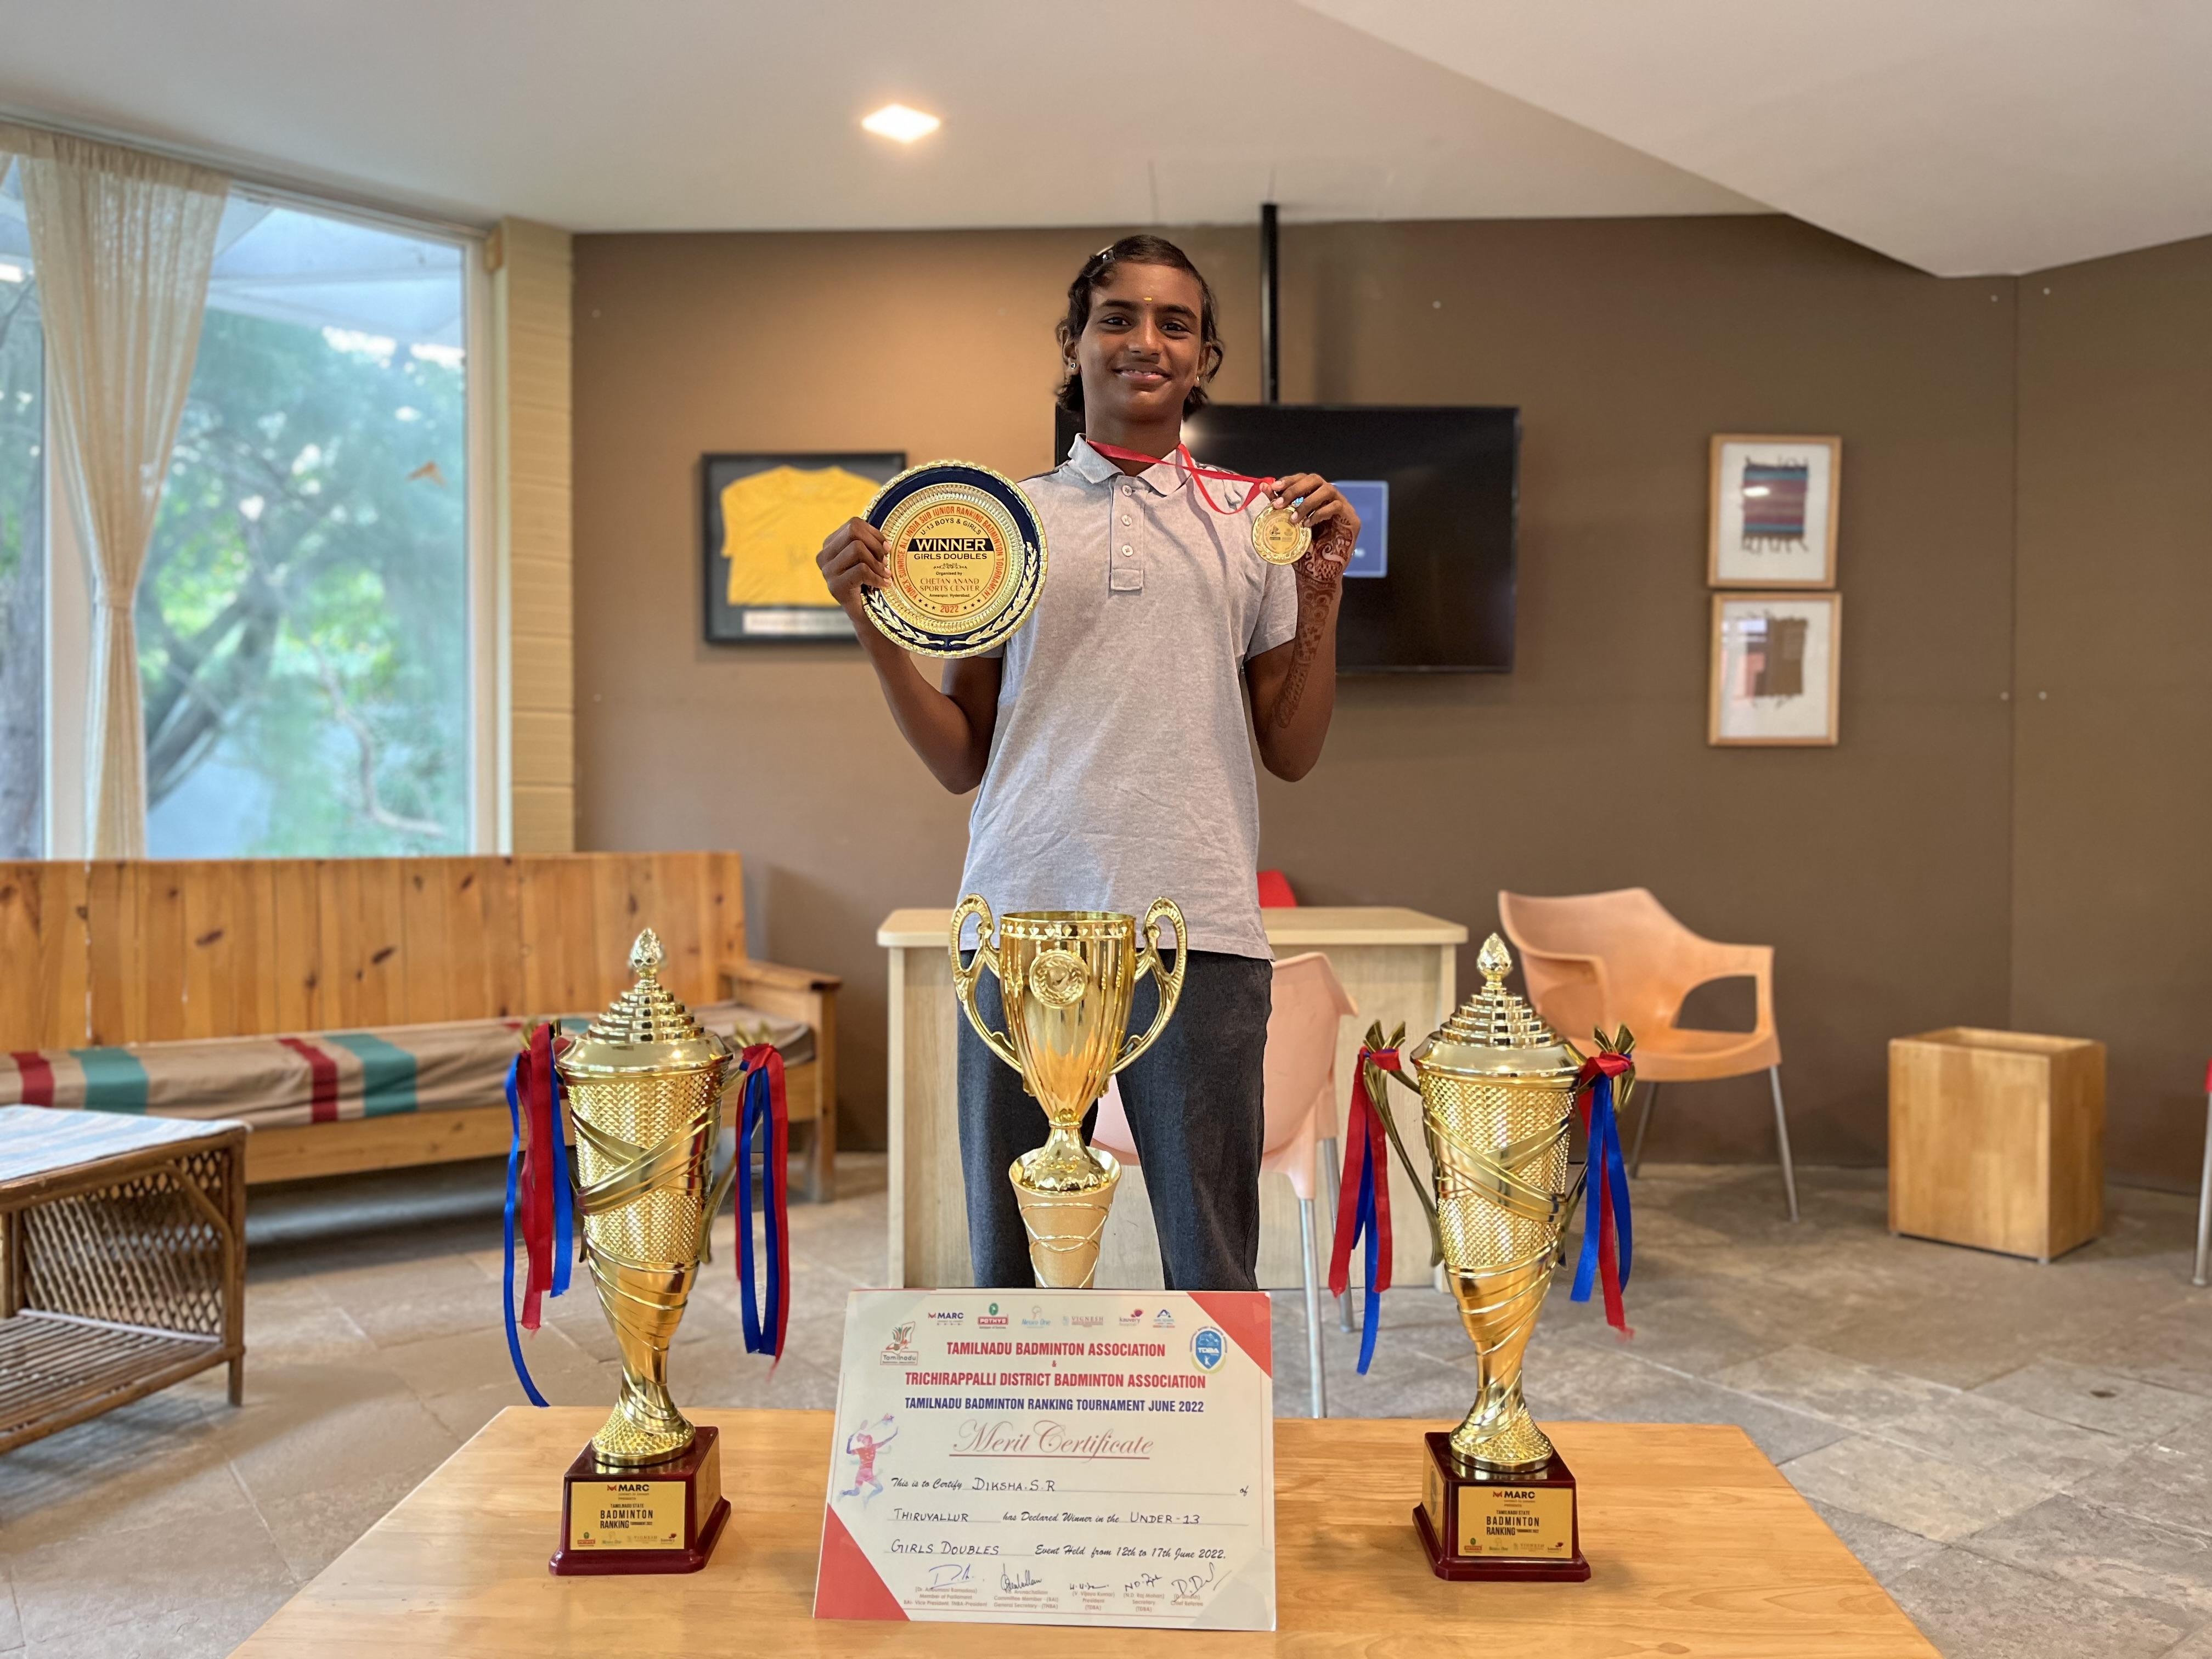 The Pupil Badminton Champion - Winning is now a habit!